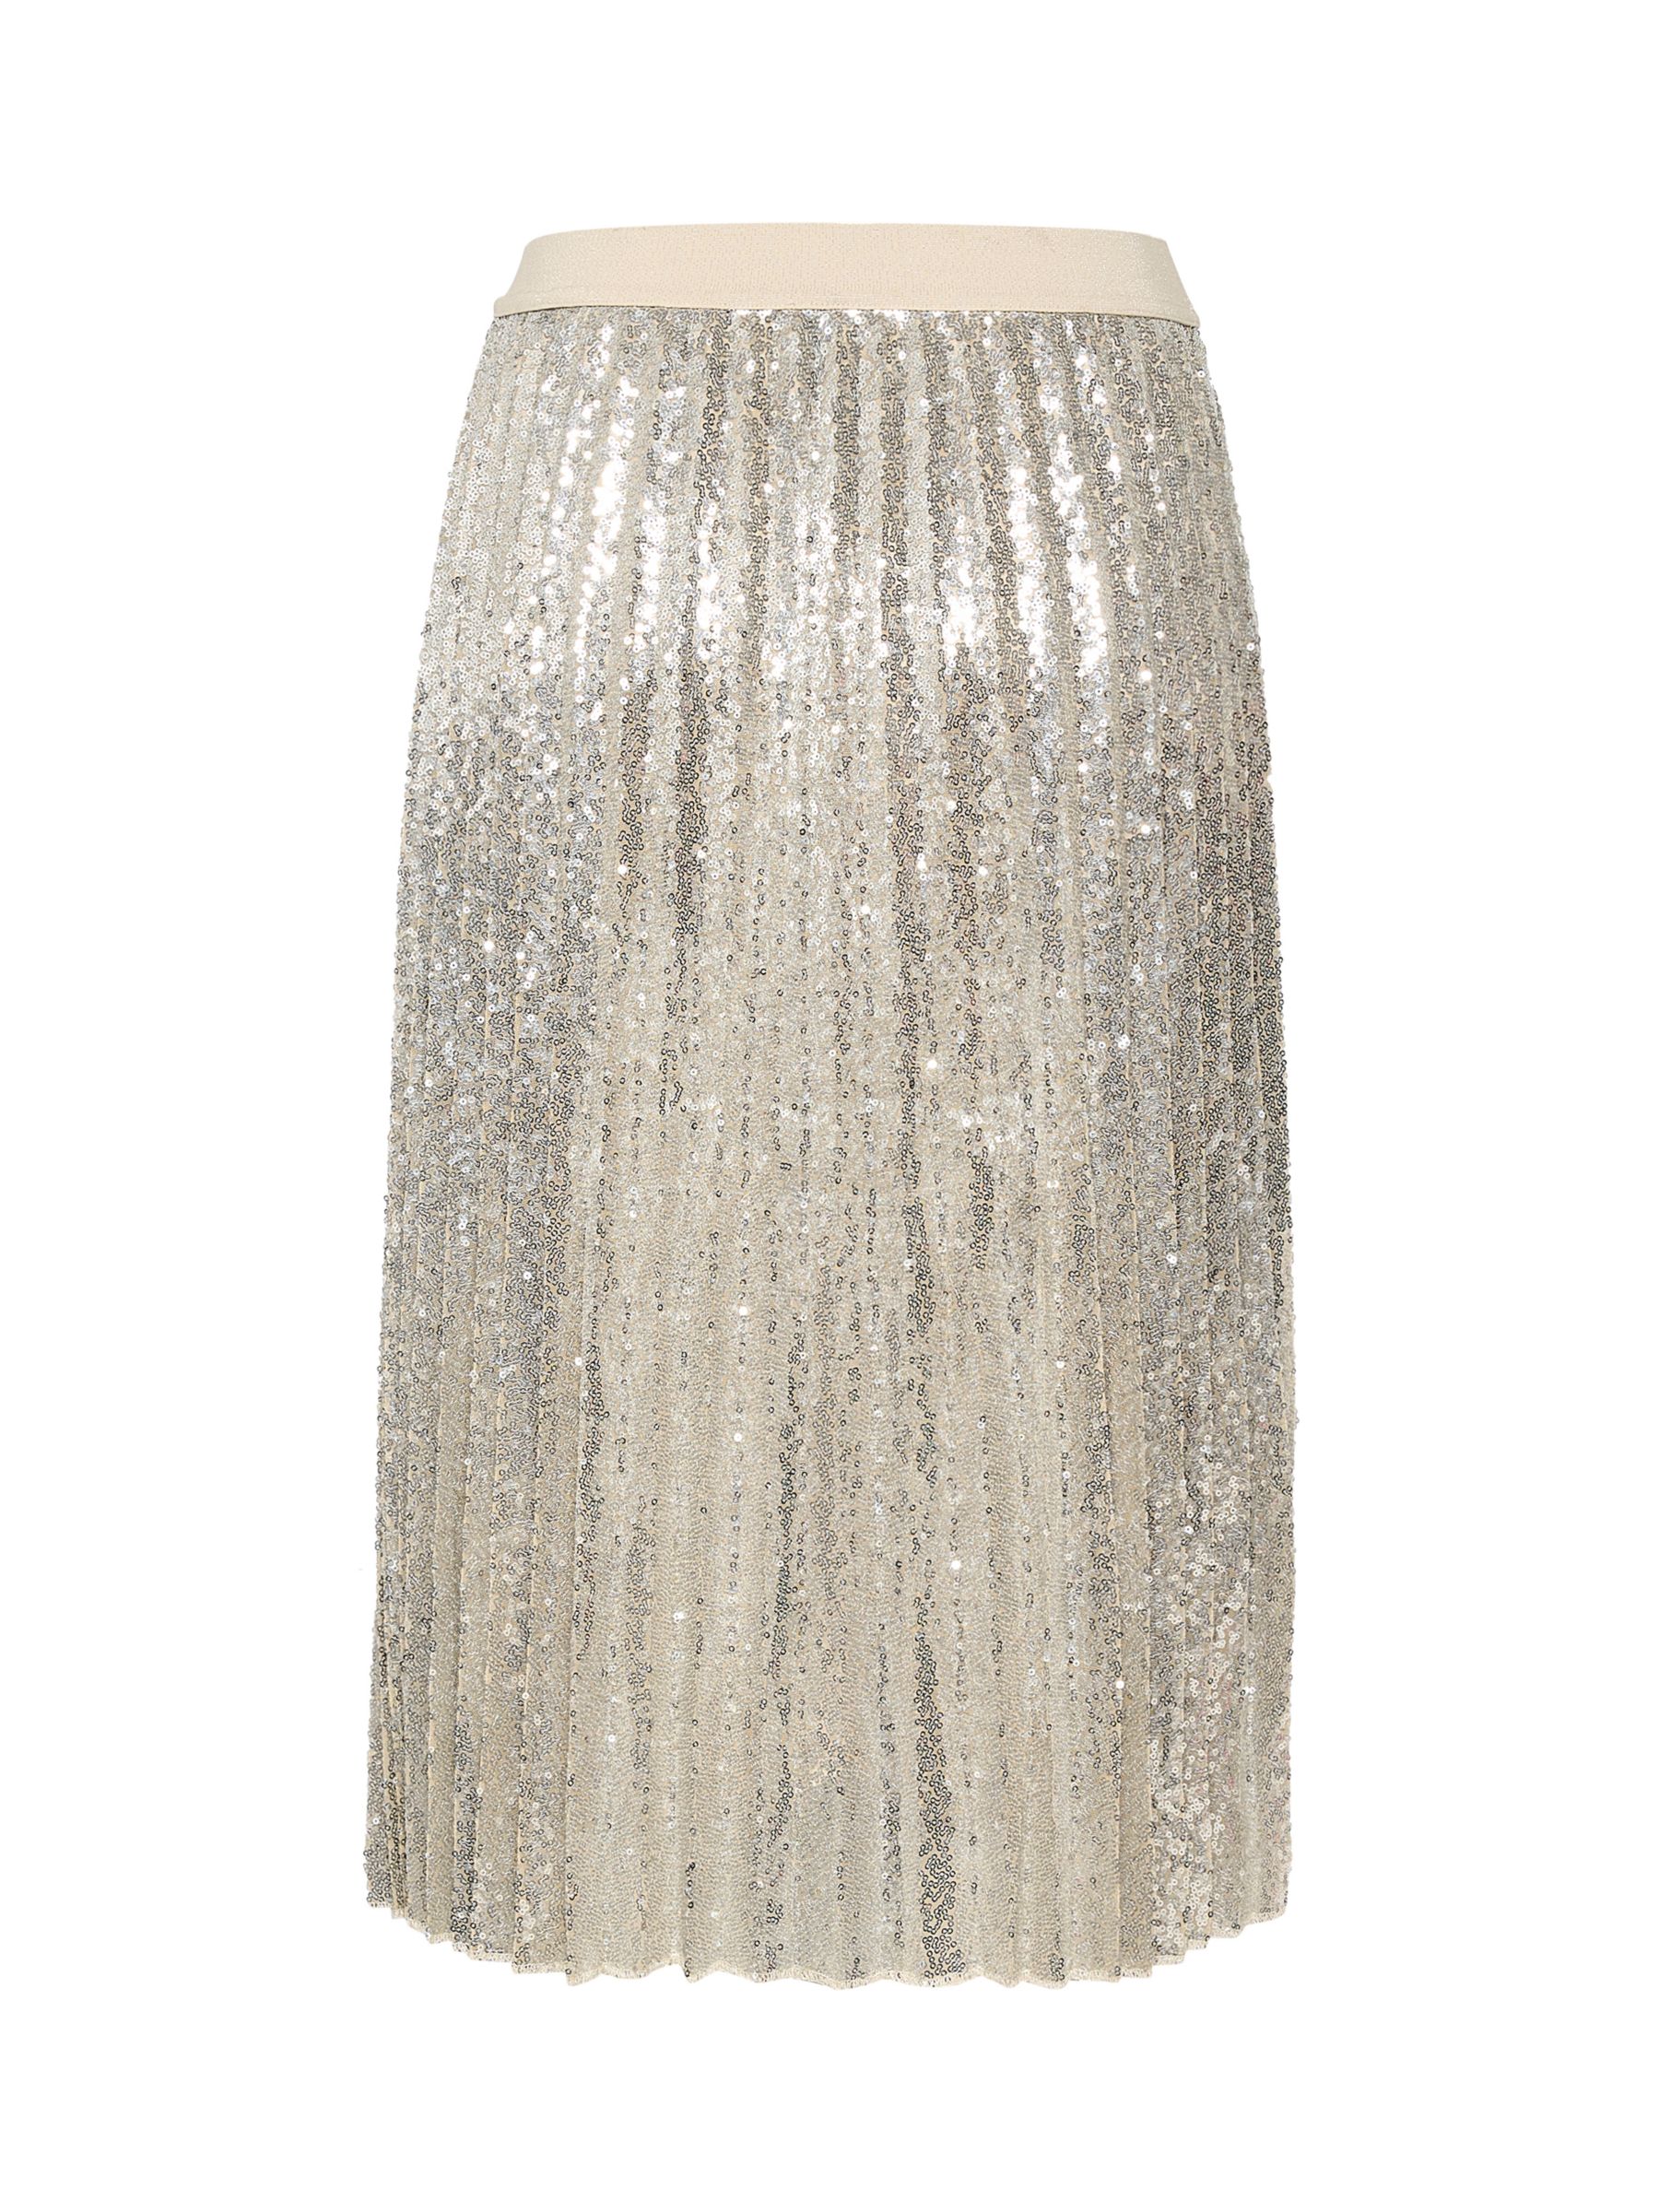 Saint Tropez Benisa Sequin Pleated Skirt, Silver at John Lewis & Partners